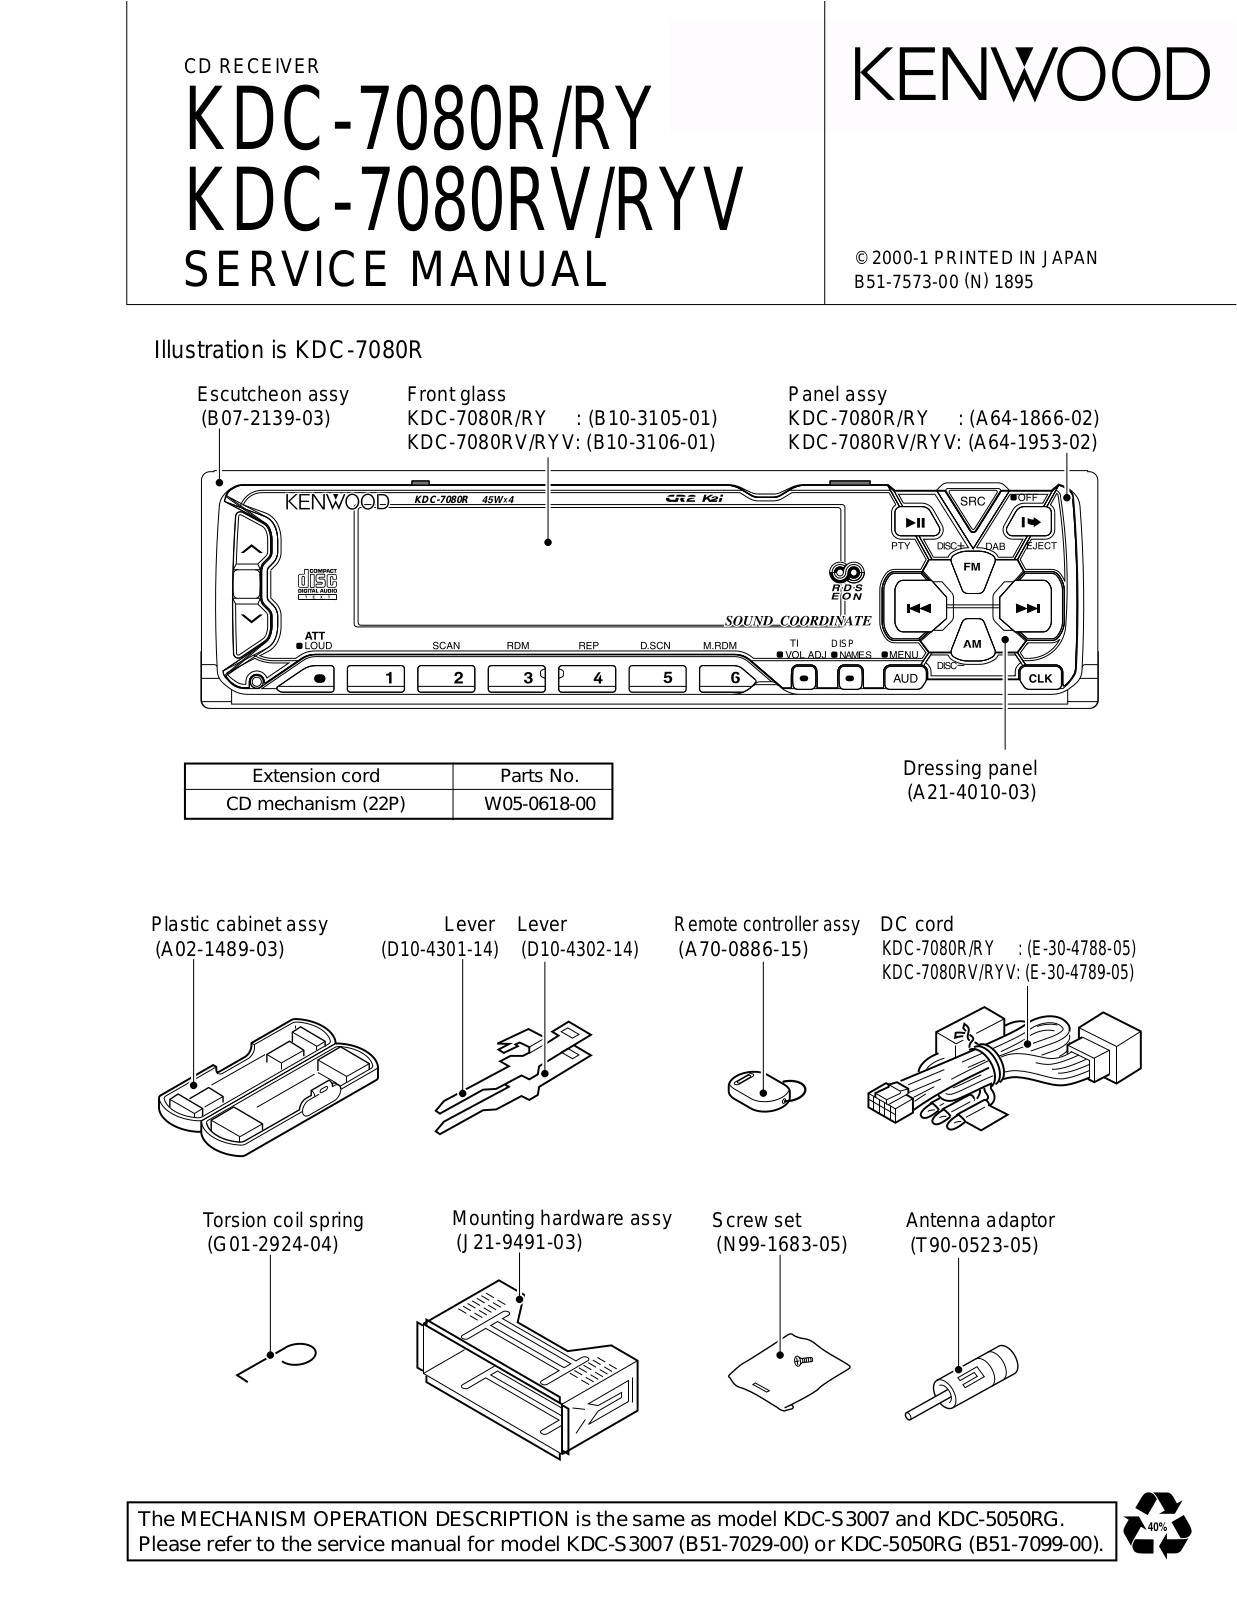 Kenwood KDC-7080-RYV, KDC-7080-RY, KDC-7080-RV, KDC-7080-R Service Manual